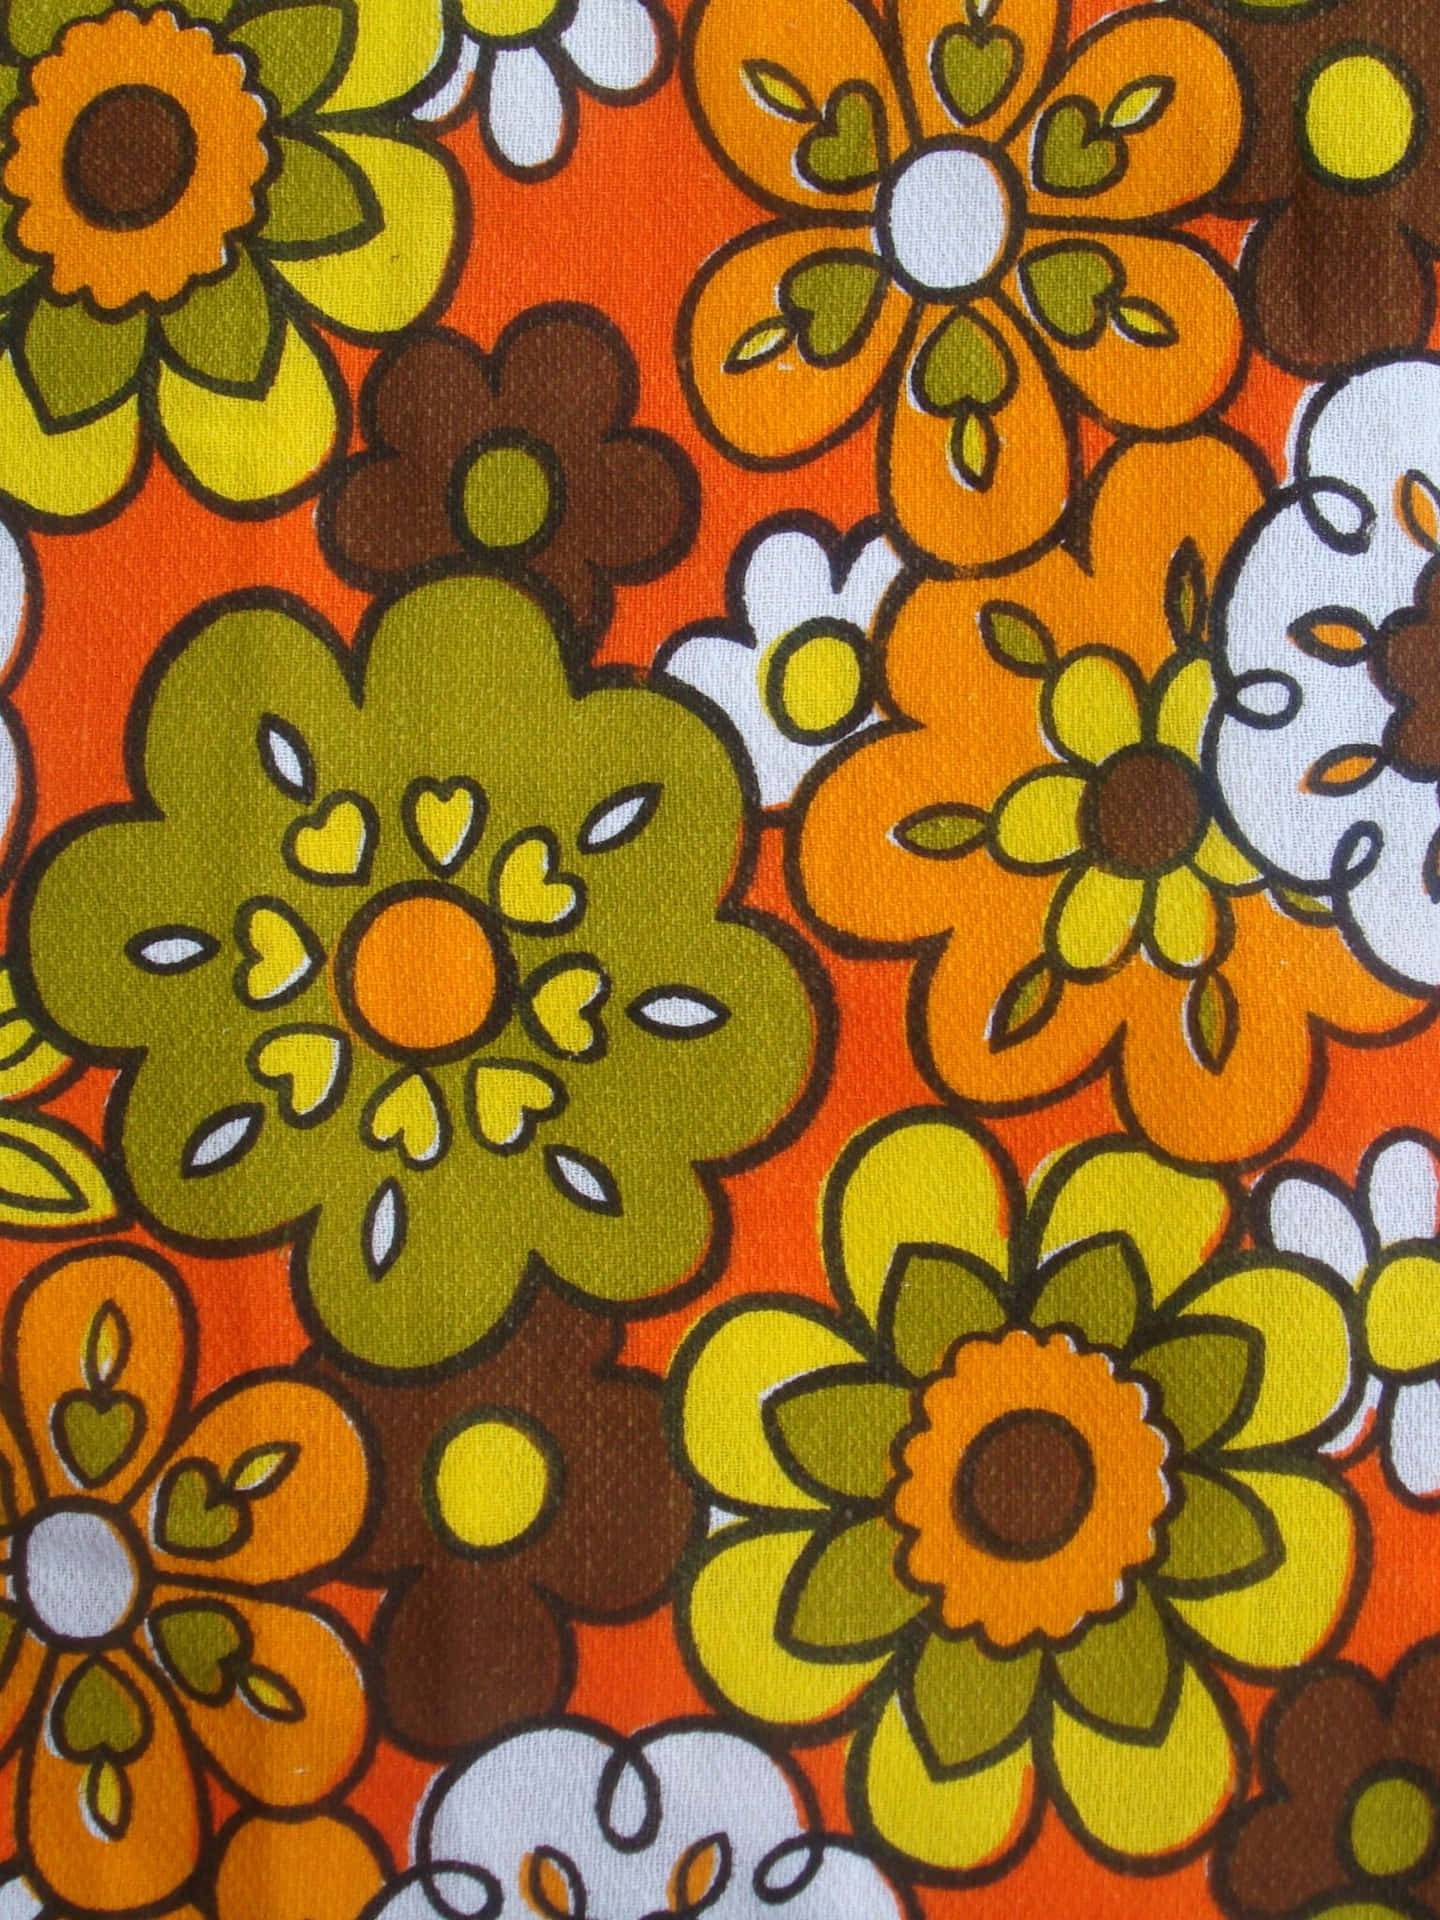 Vintage 60s Blooming Floral Pattern Wallpaper